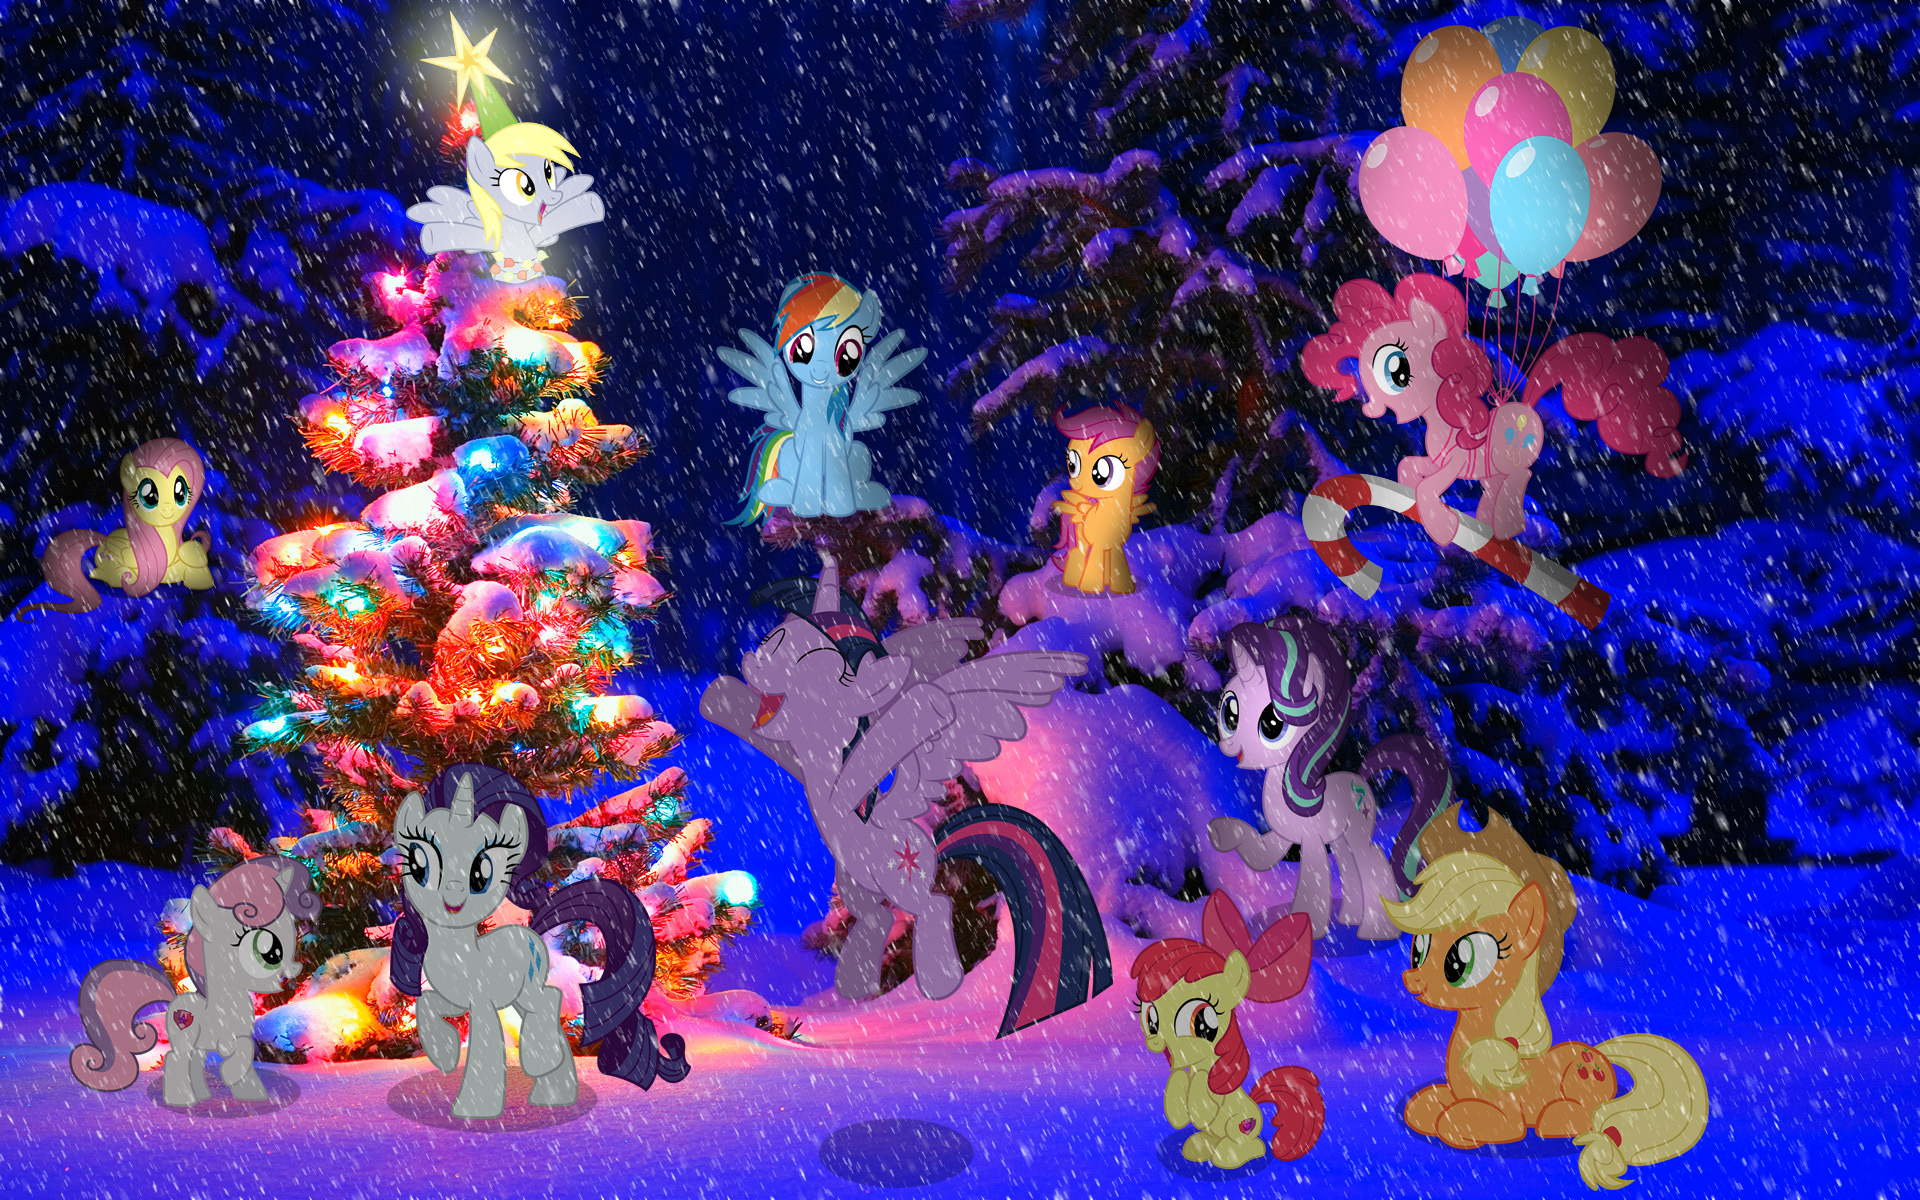 #Christmas tree, #Snowfall, #Ponies. Holidays